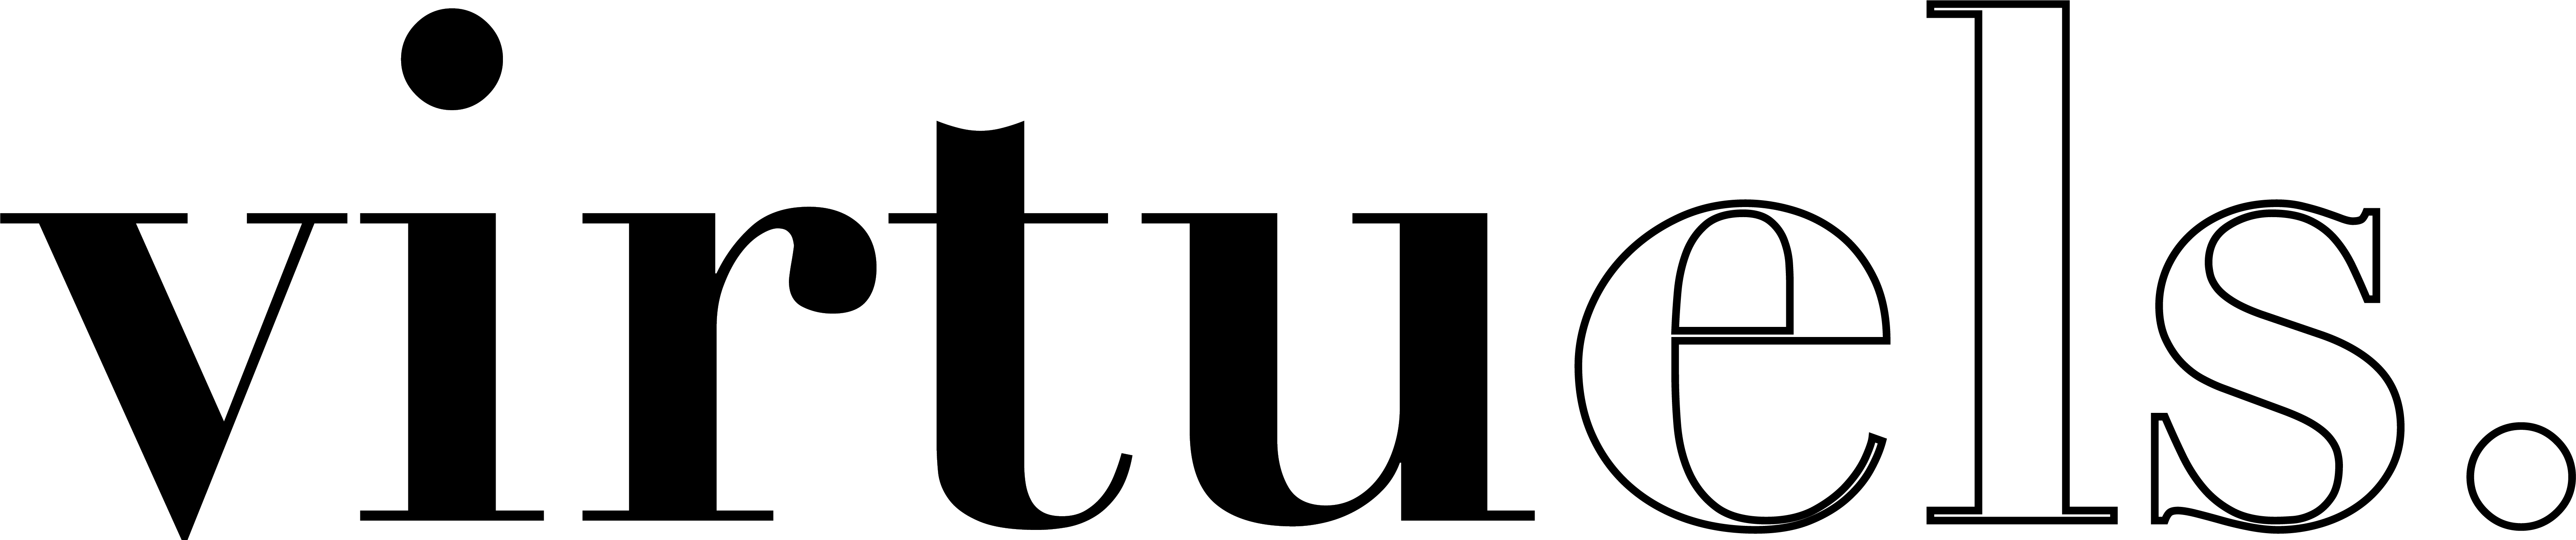 Logo virtuels transparant